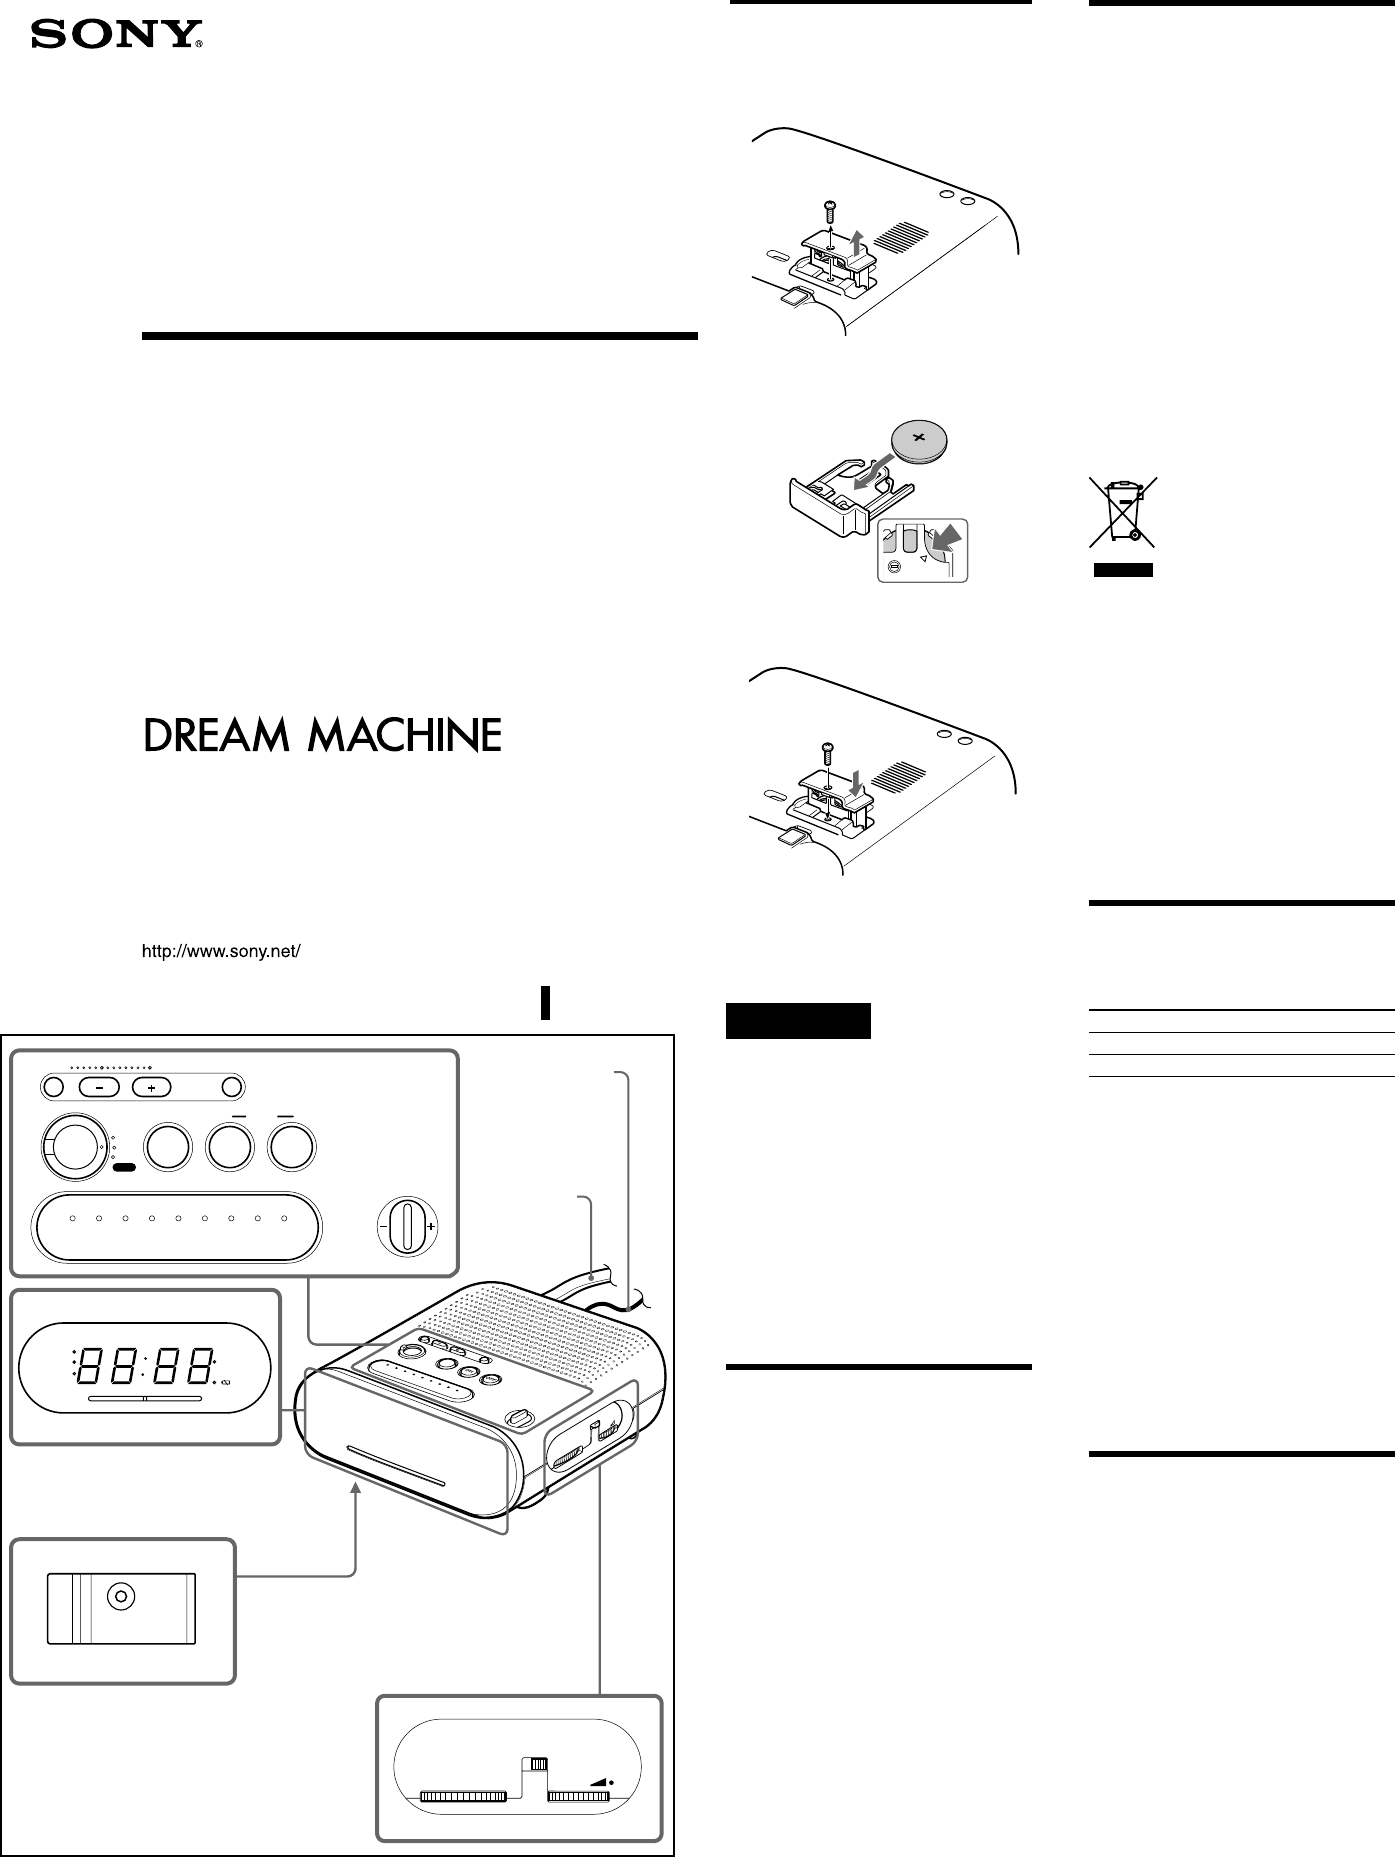 Sony Dream Machine AM FM Dual Alarm Clock Radio Model ICF-C218 Auto Time Set 